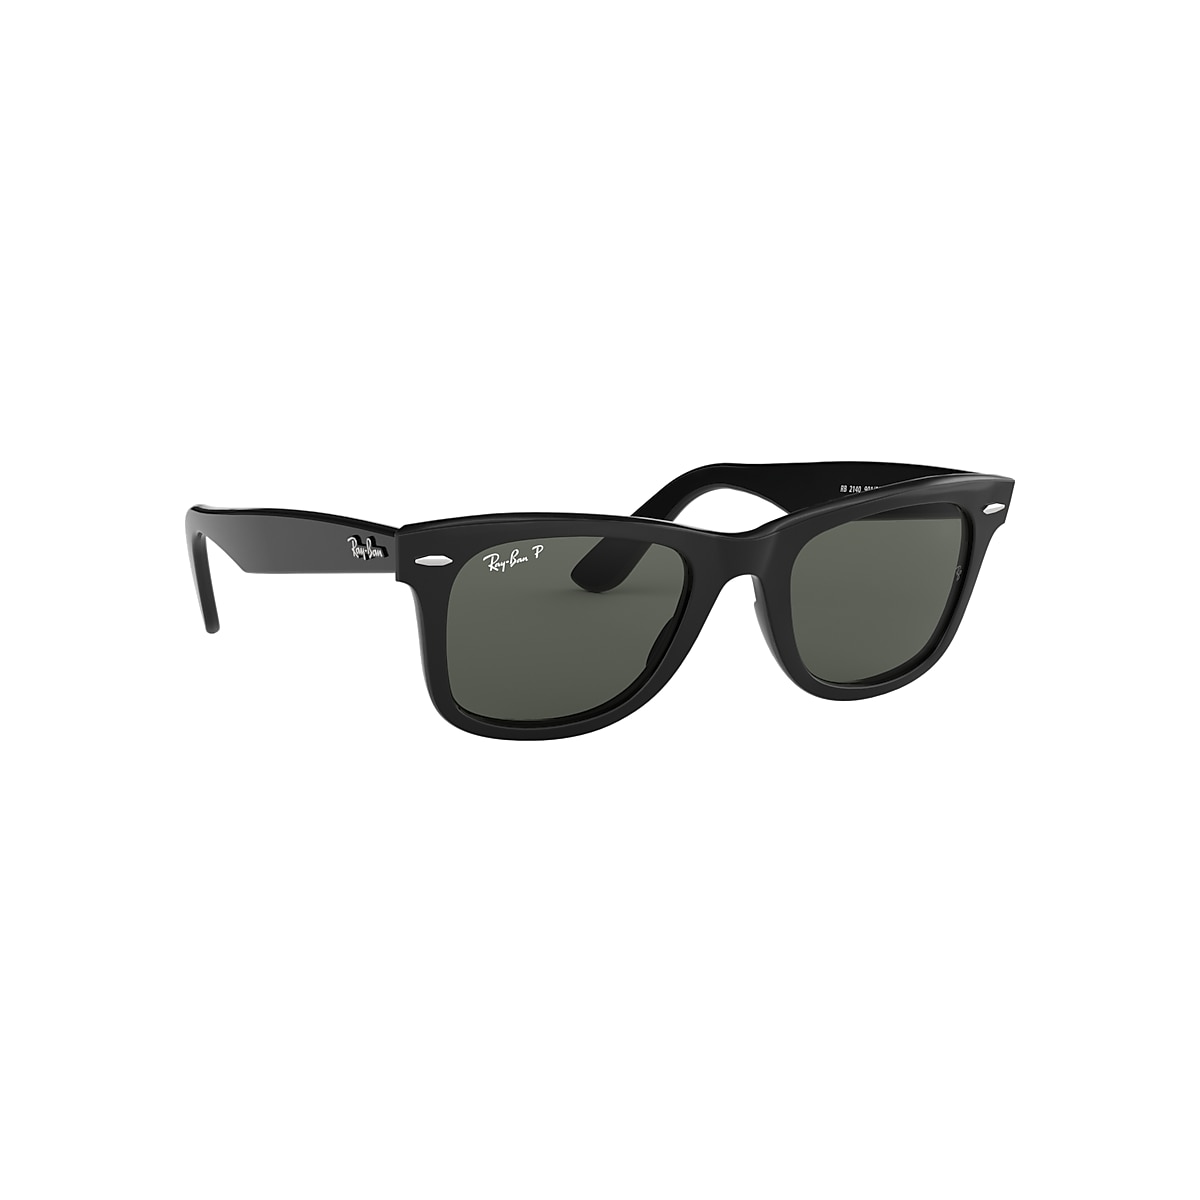 Moral equality At dawn Original Wayfarer Classic Sunglasses in Black and Green | Ray-Ban®